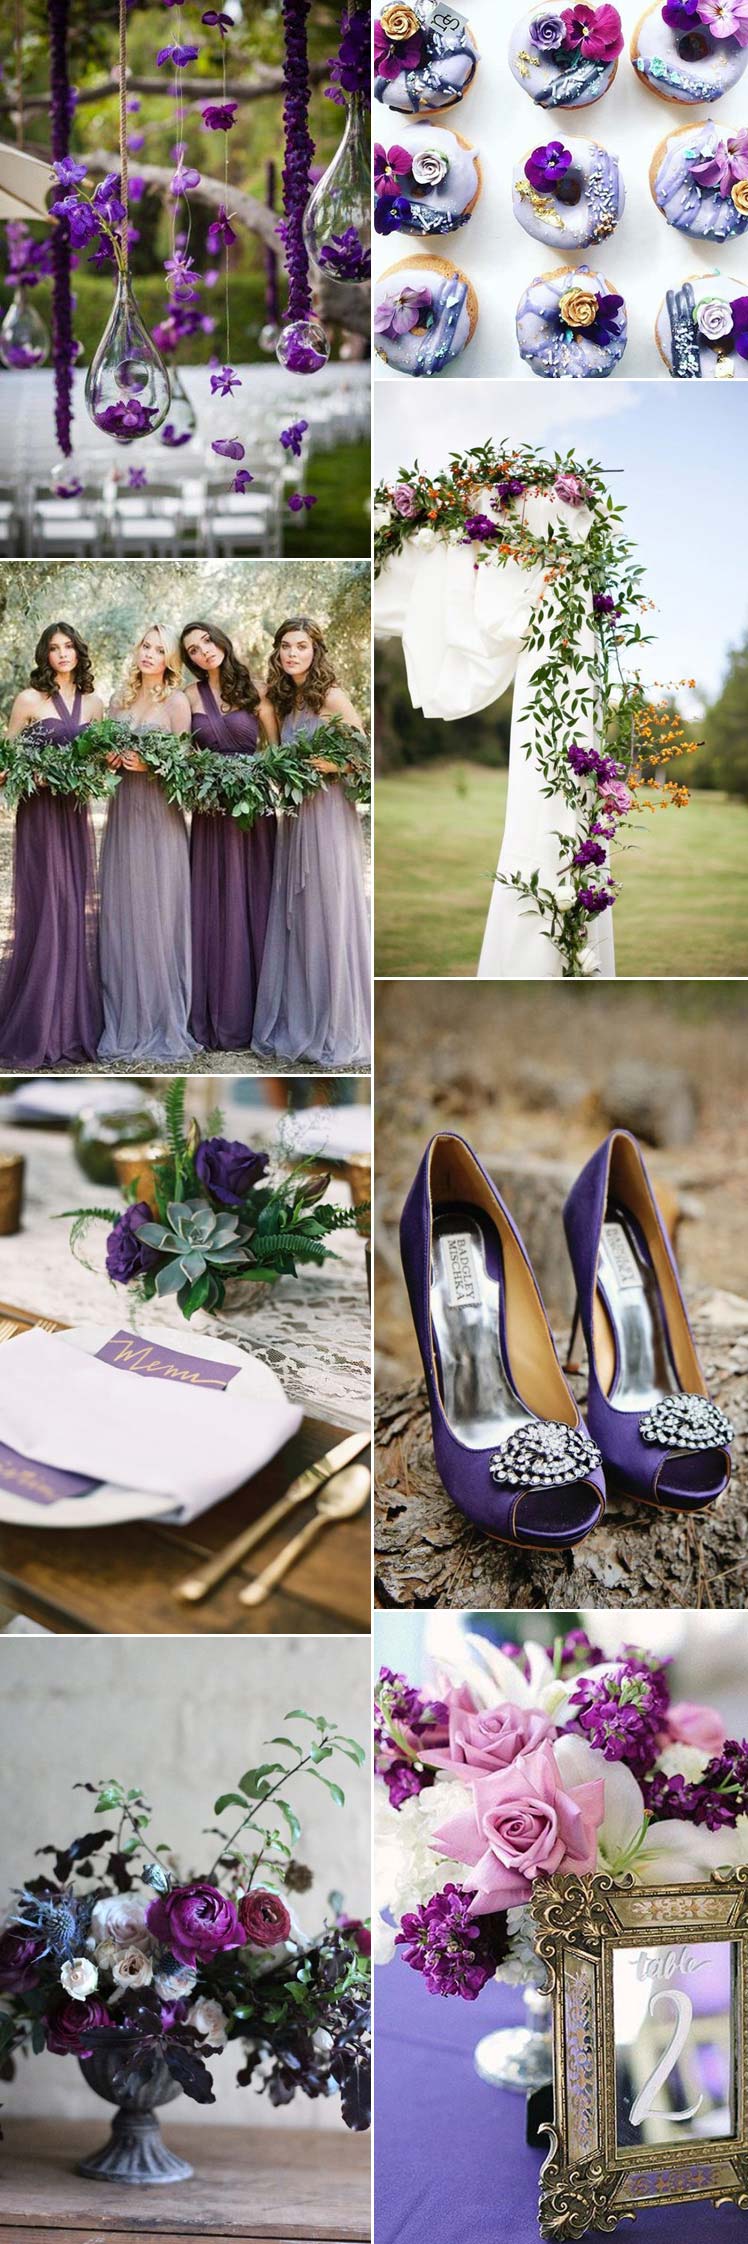 Ultra Violet colour wedding theme inspiration